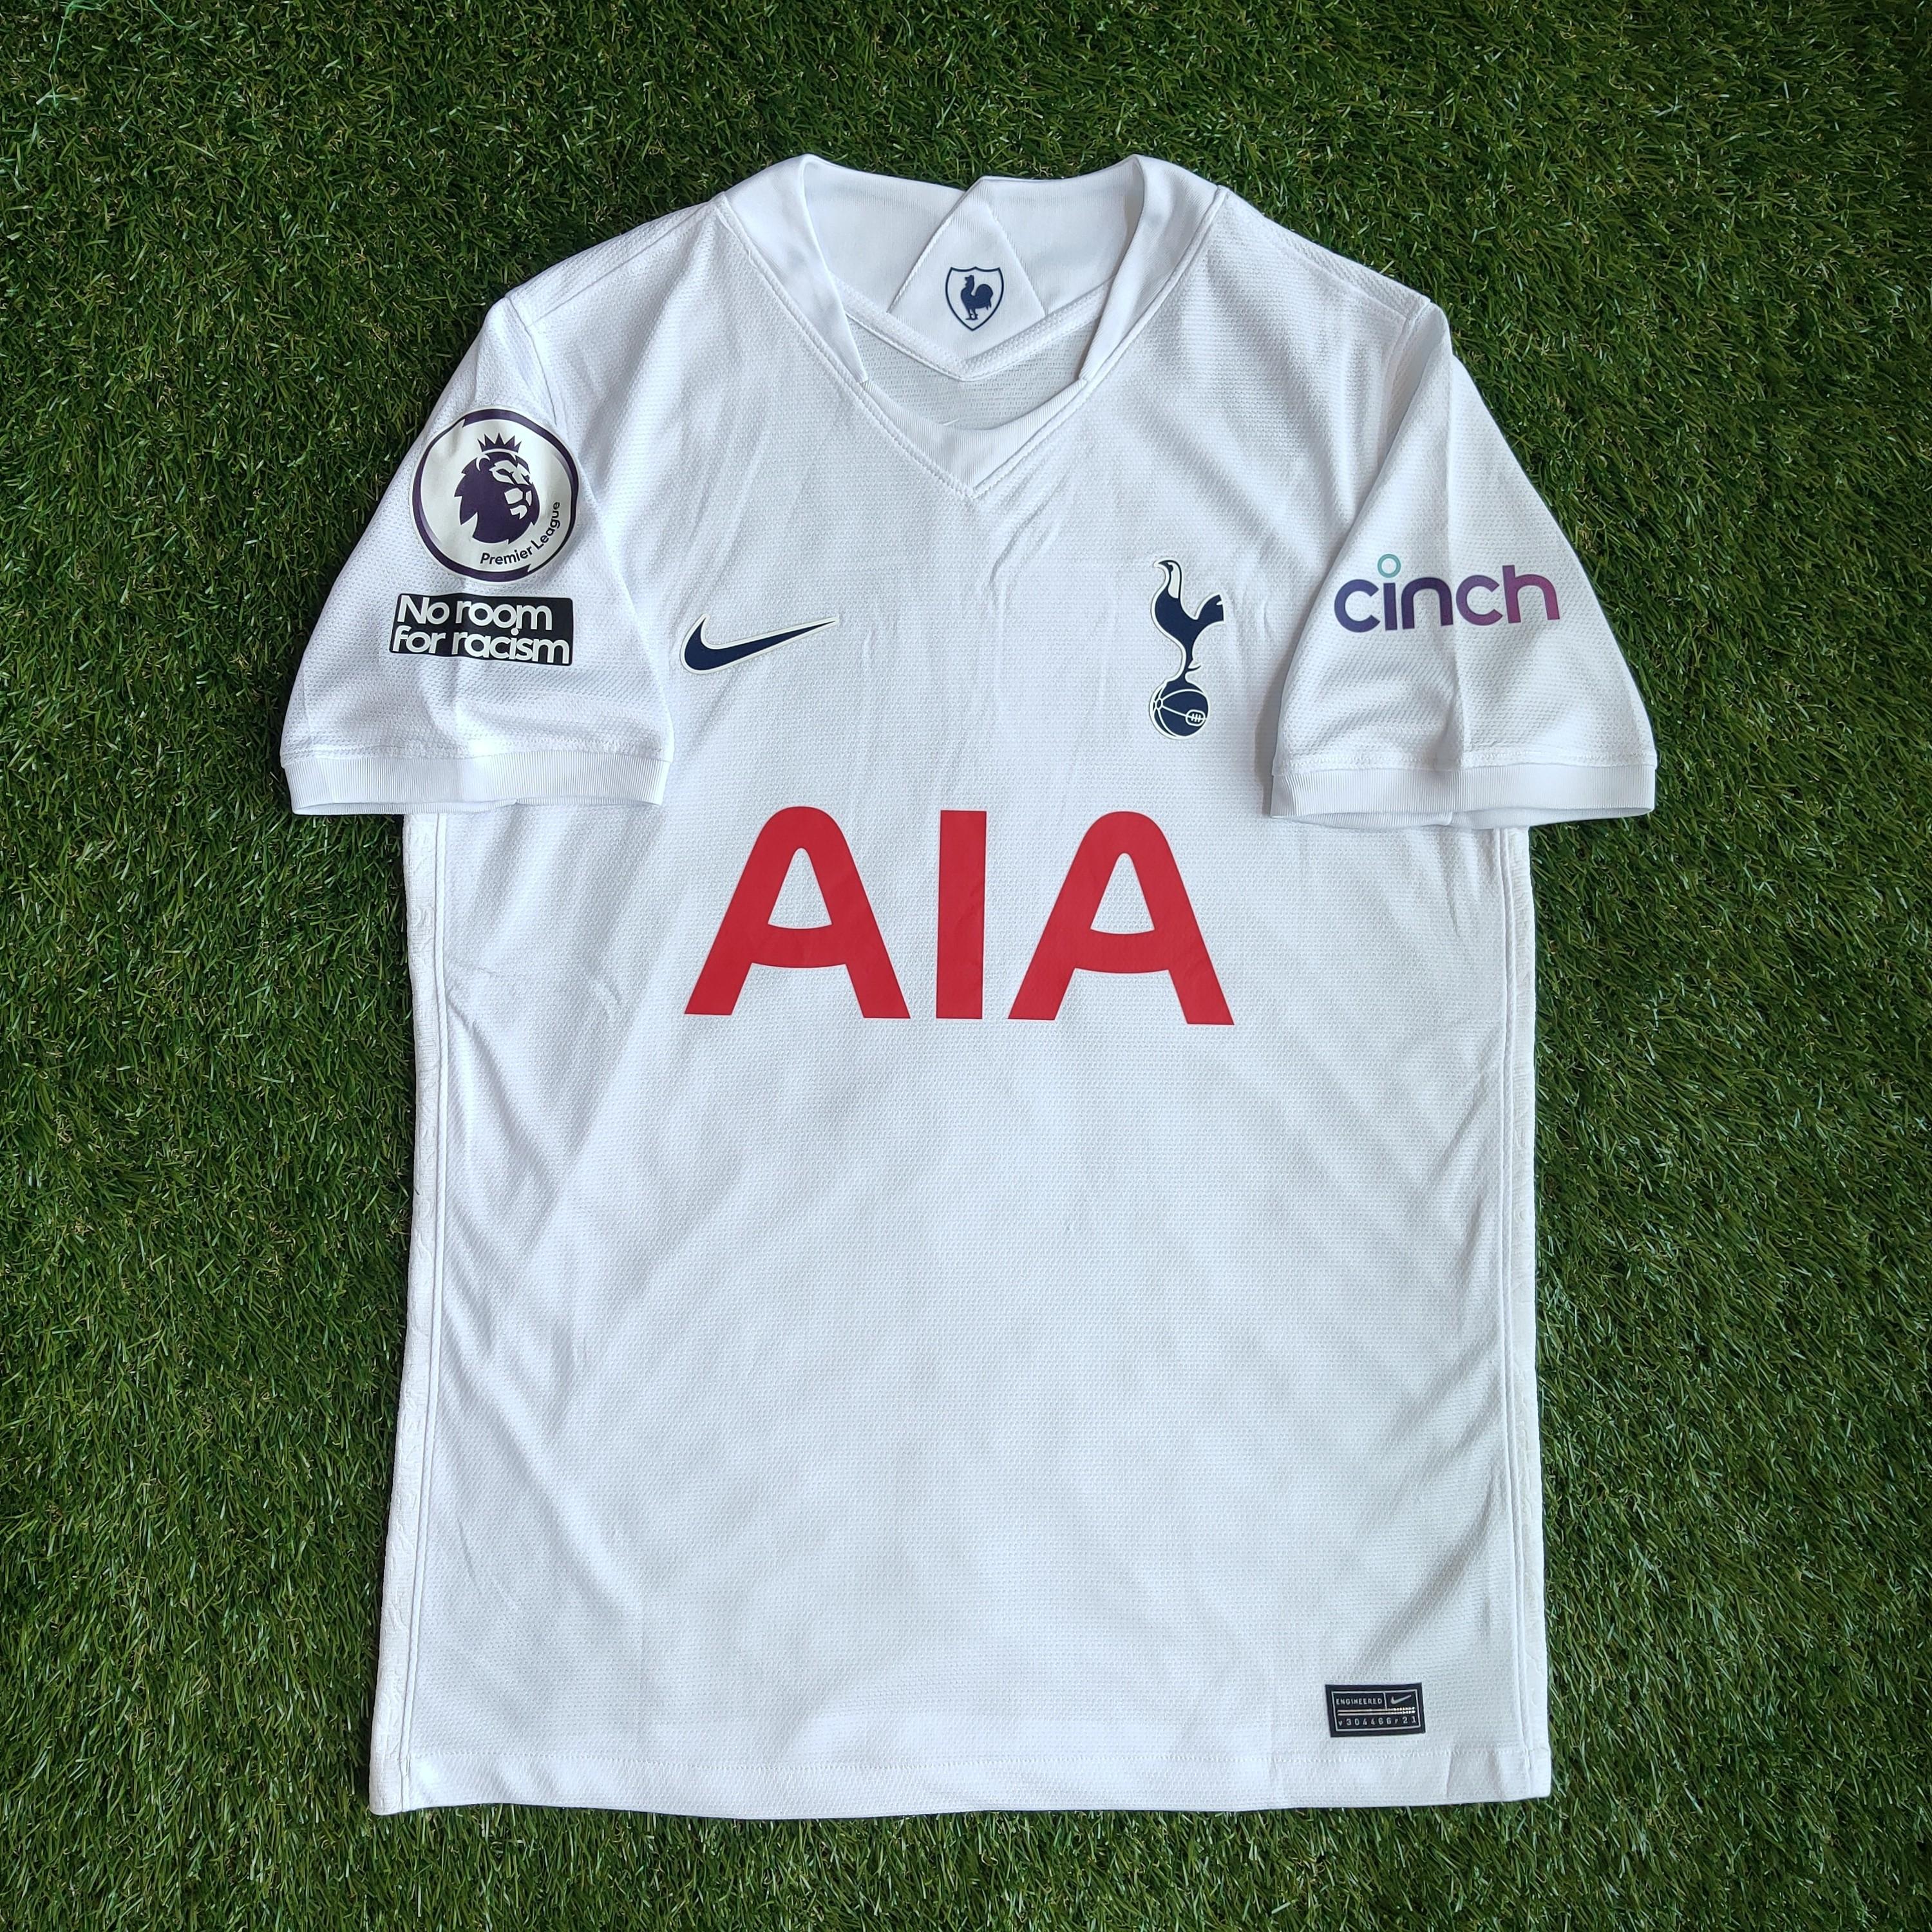 Tottenham Hotspurs F.C. Jersey (Home) 21/22 Season - White